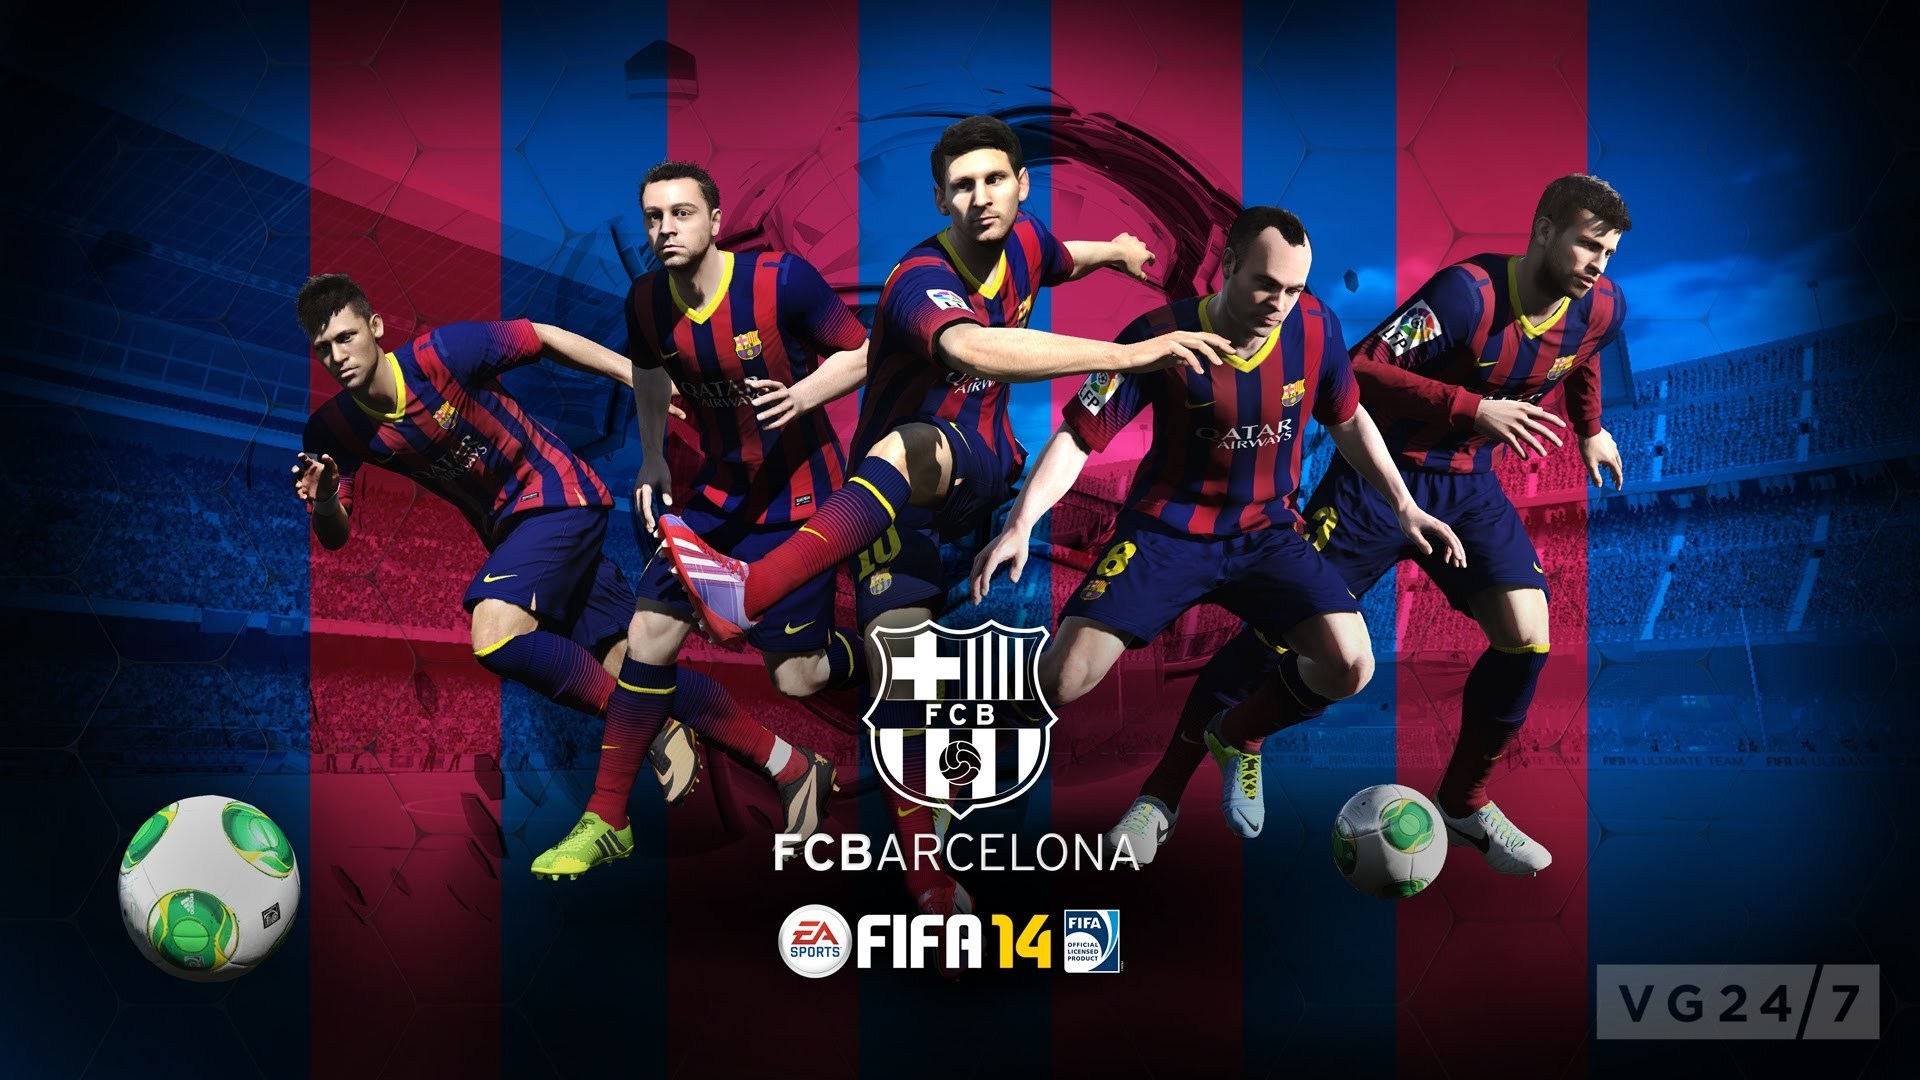 FC Barcelona FIFA football games wallpaper backgrounds   Football